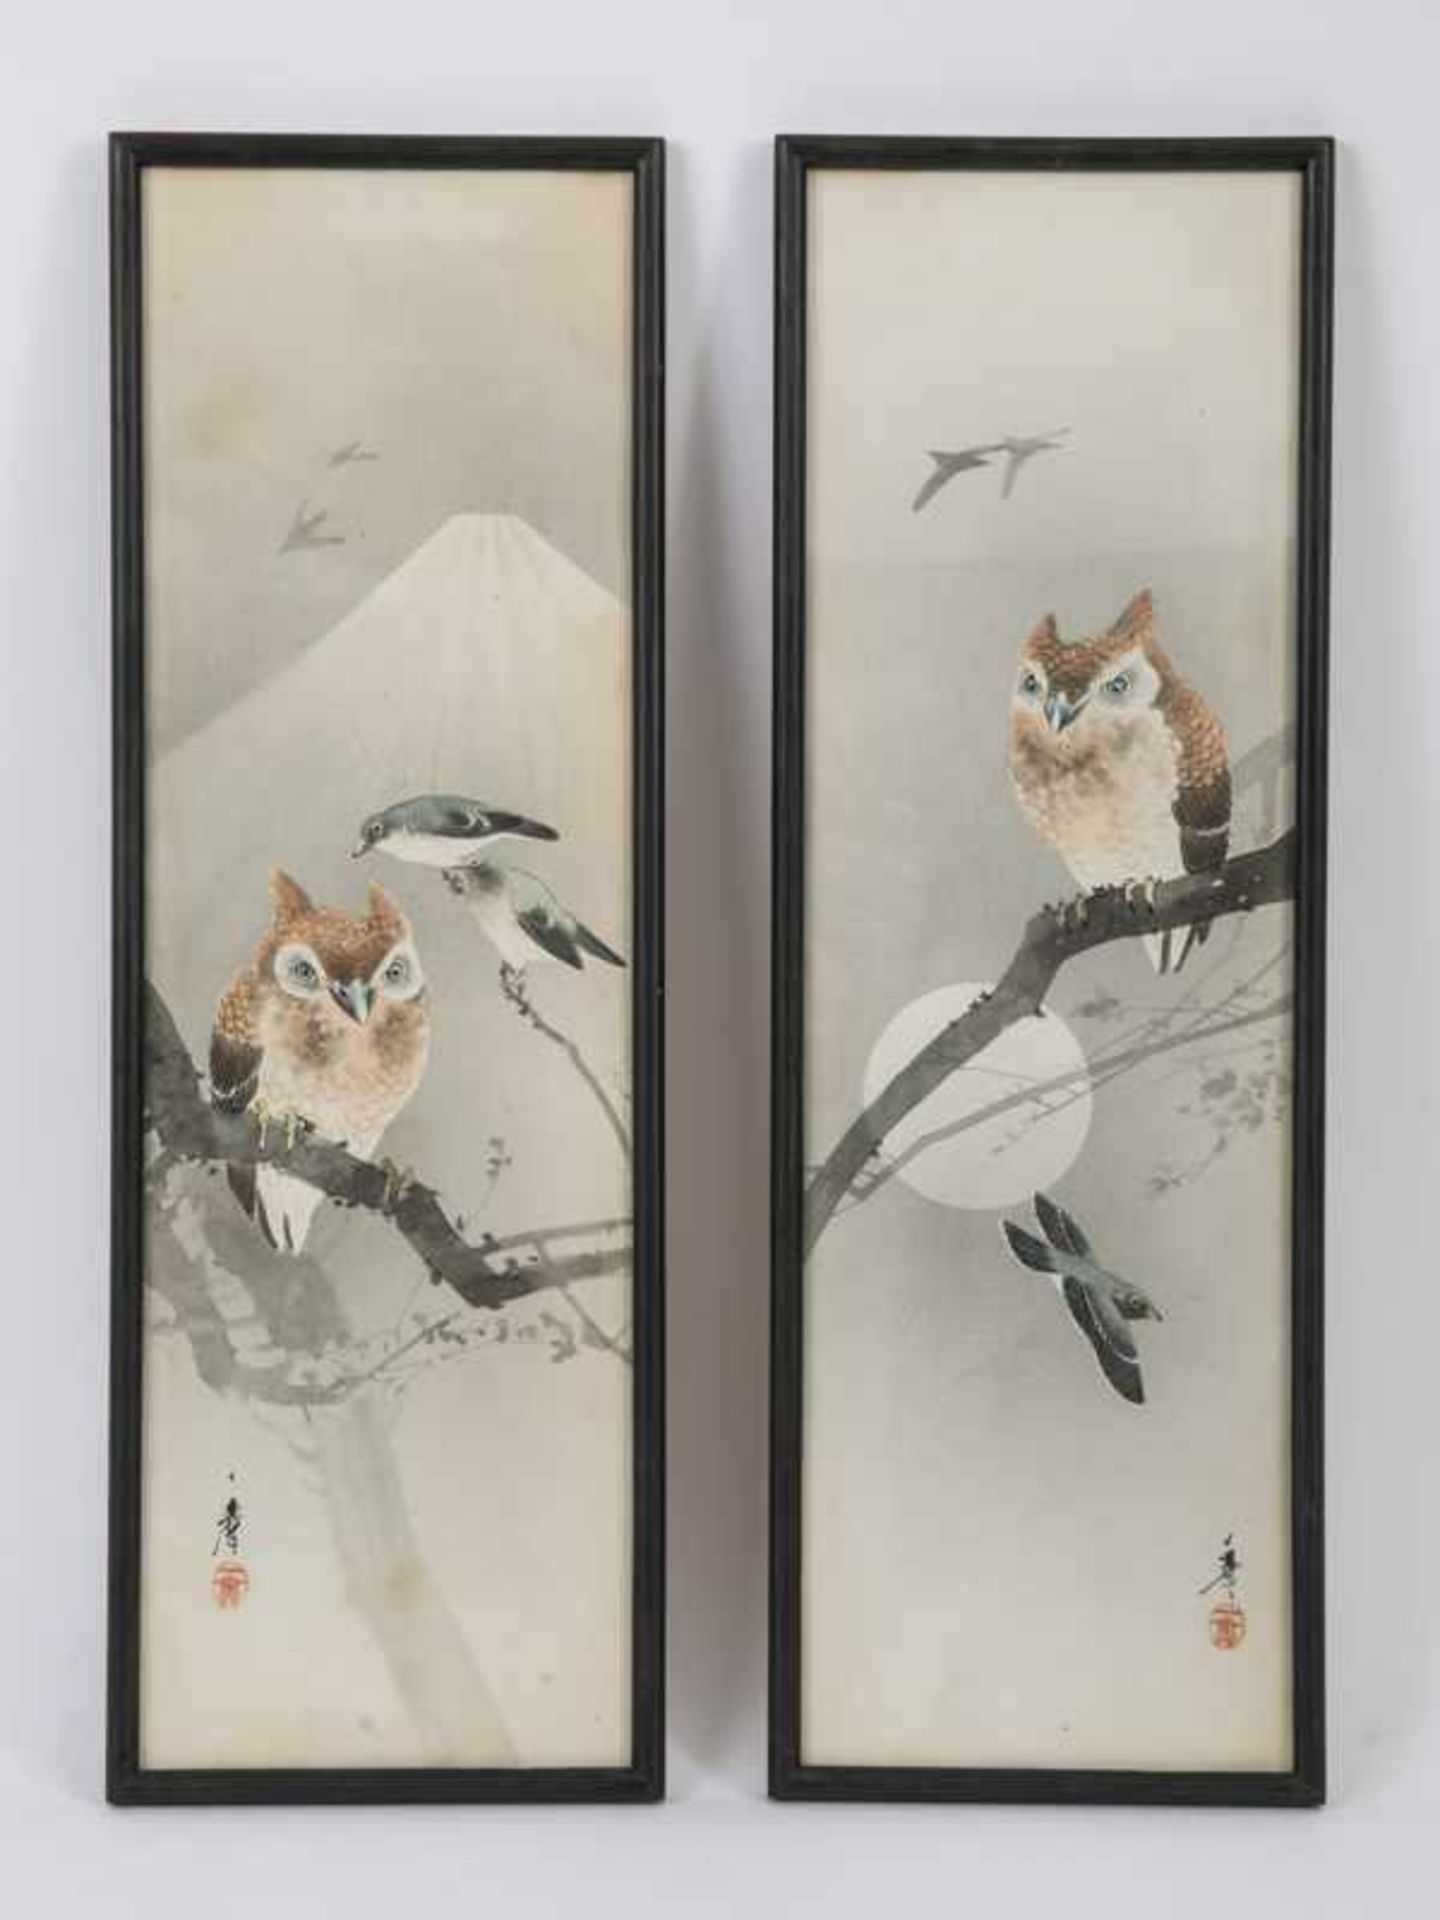 Japanischer Aquarellist, Anfang 20. Jh. Paar Aquarellzeichnungen, "Eulen mit Vögeln und